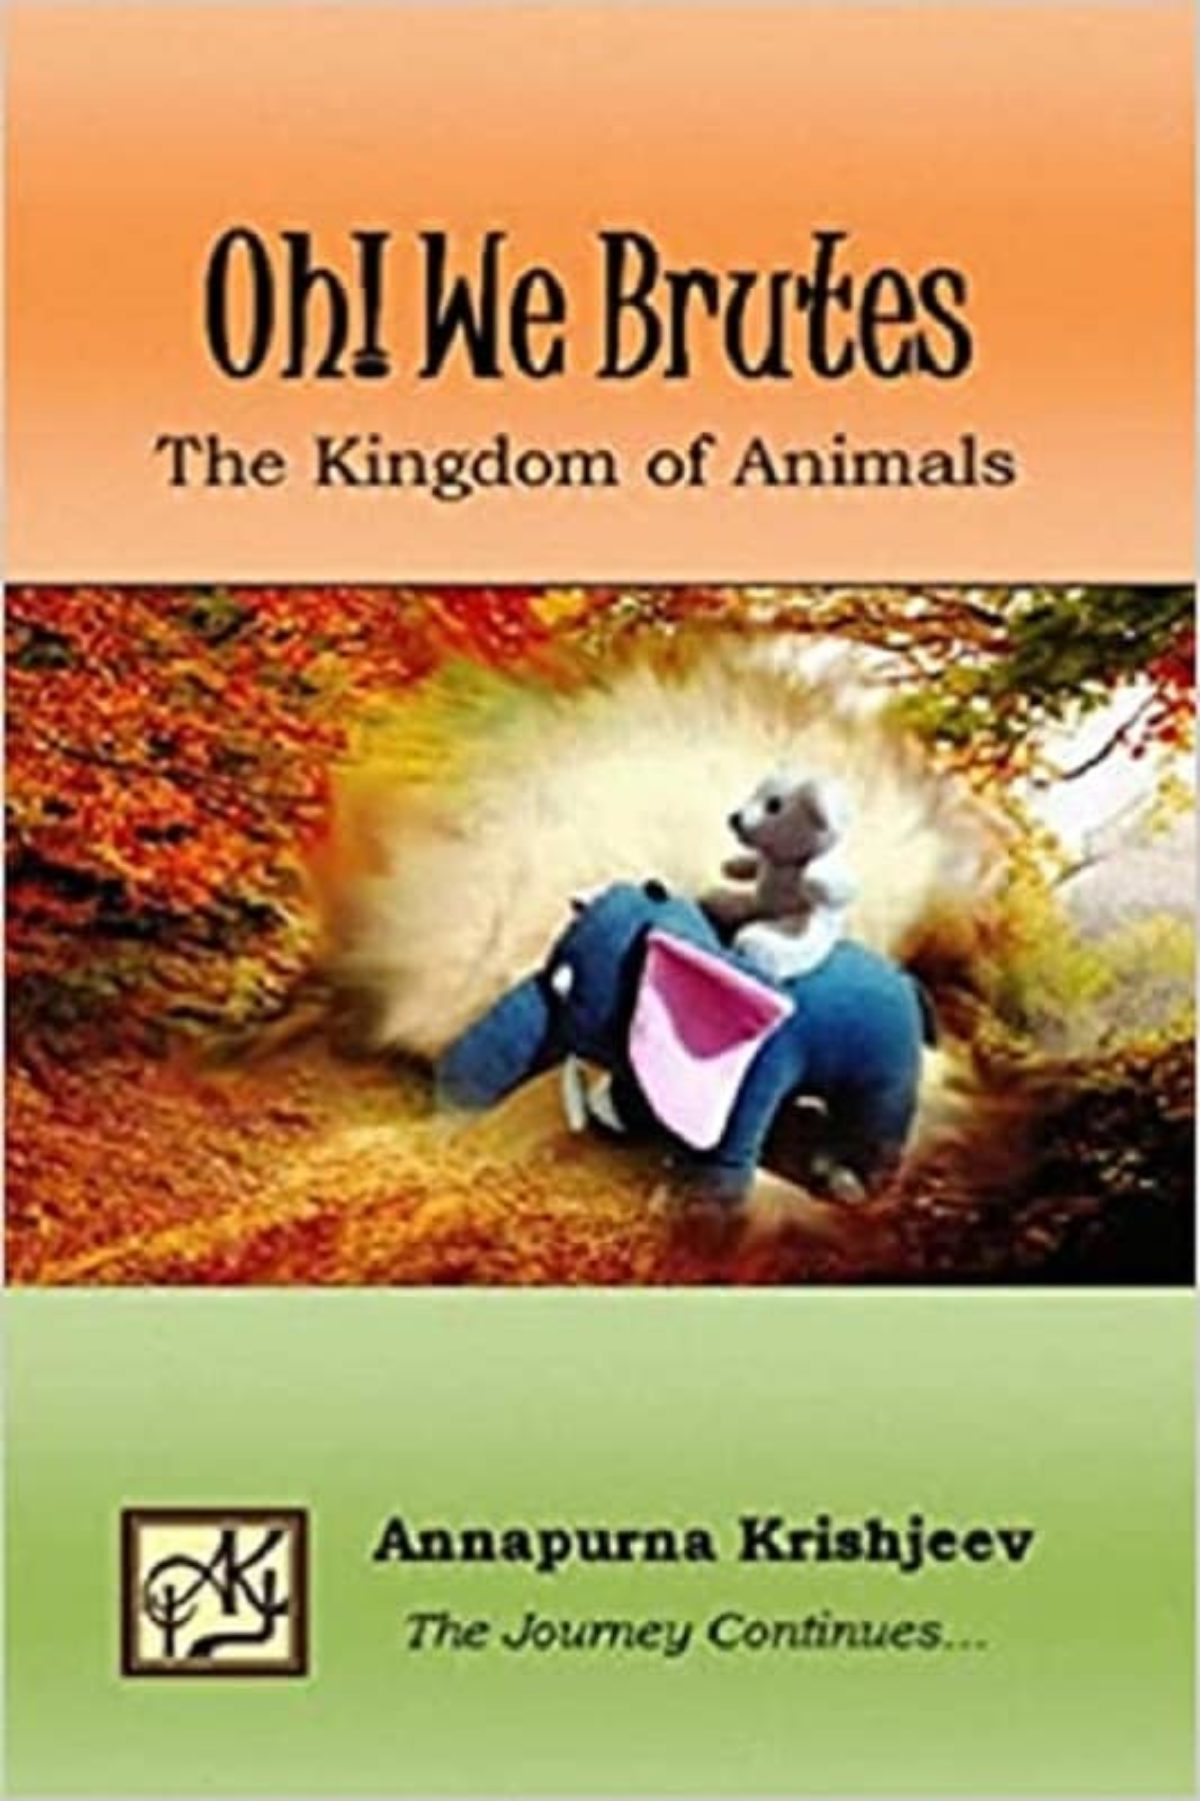 Oh! We Brutes: The Kingdom of Animals | Annapurna Krishjeev | Review